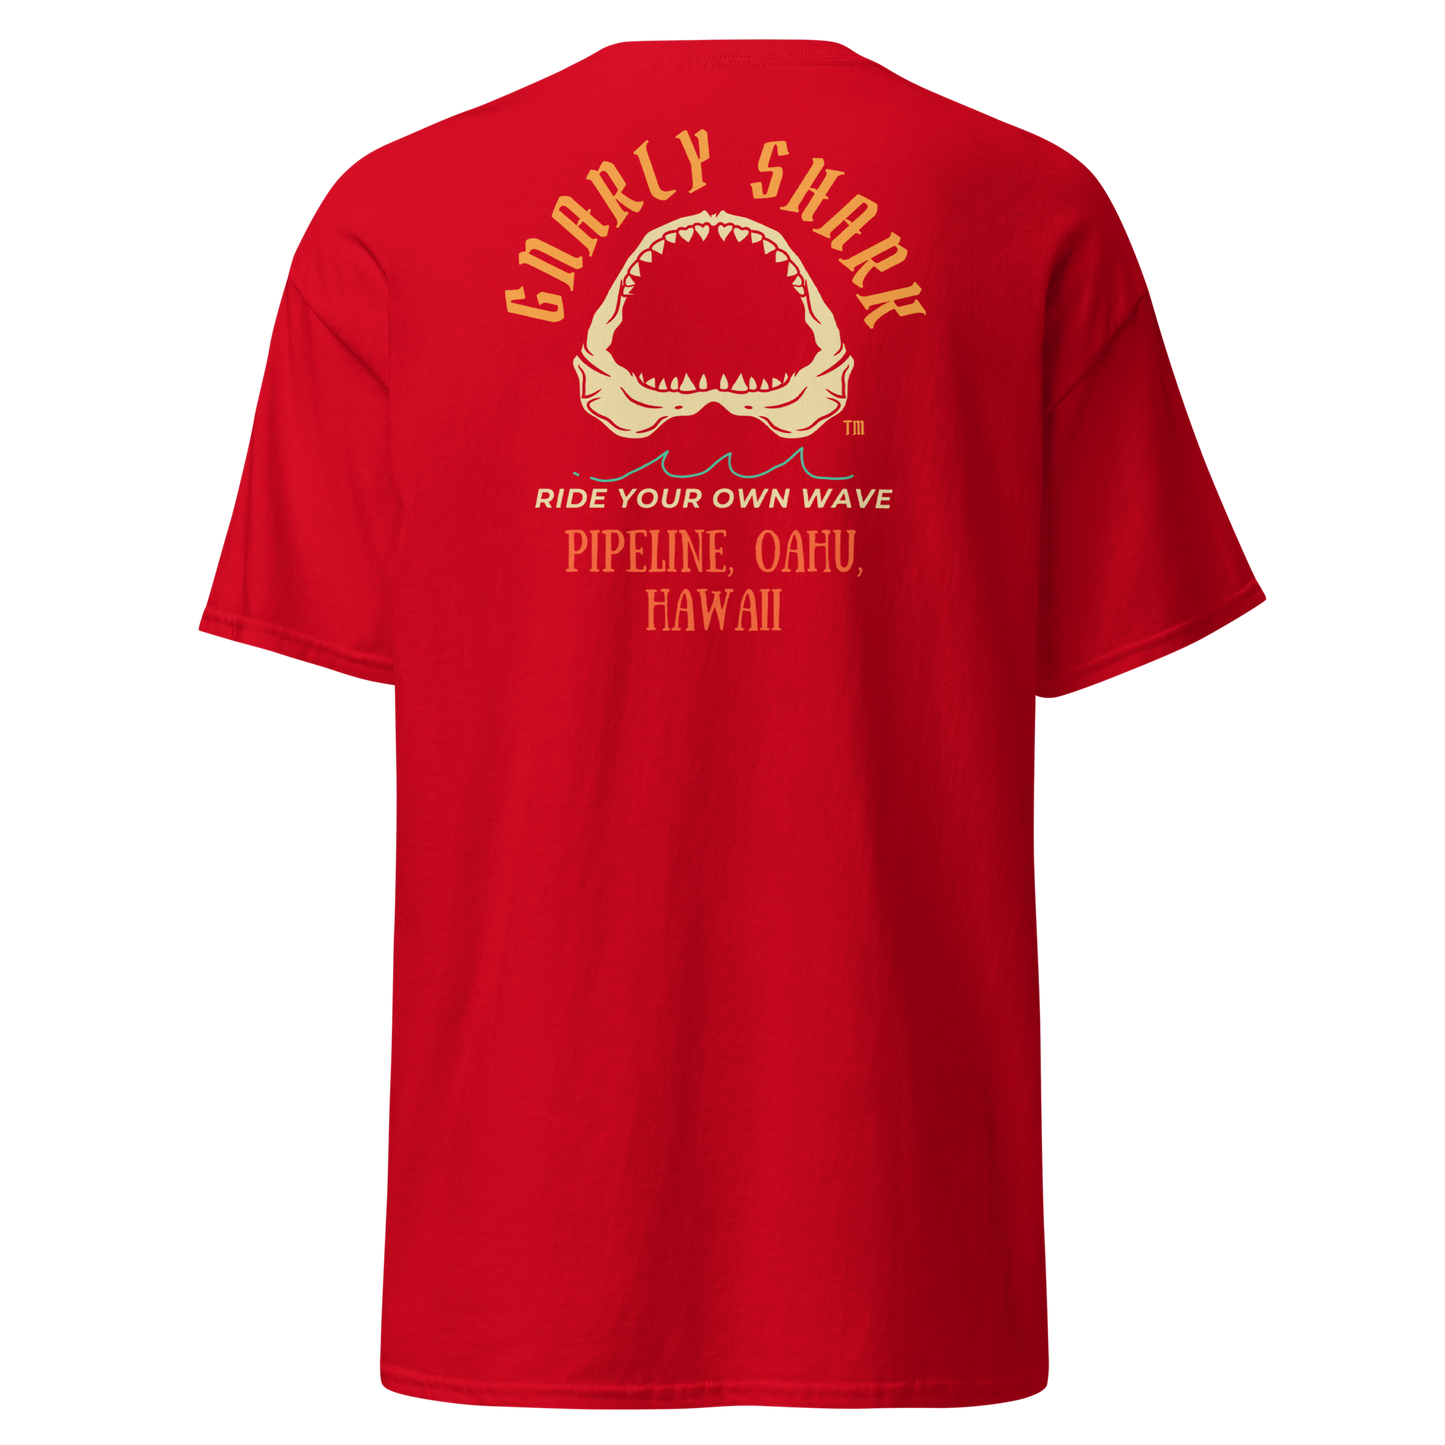 Gnarly Shark Pipeline Oahu Hawaii T-Shirt - Front / Back - Gildan classic 5000